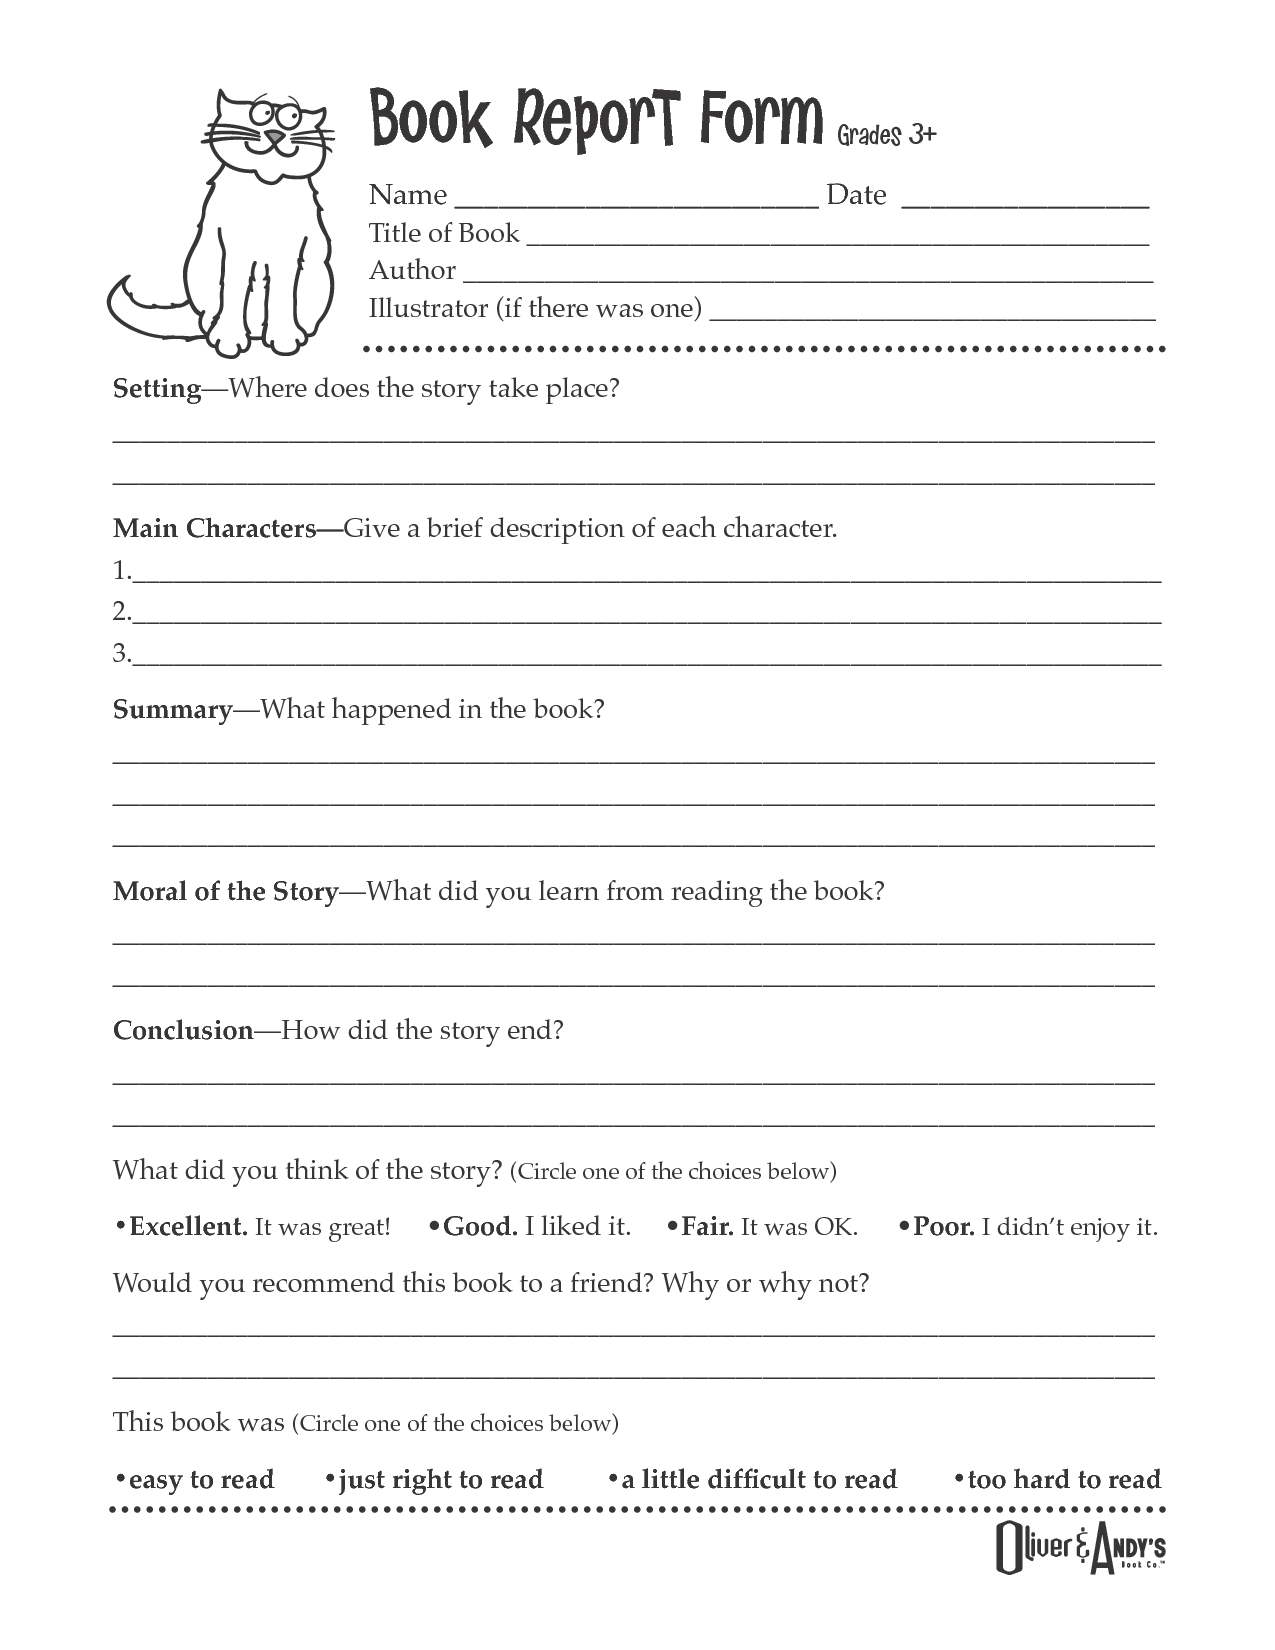 Second Grade Book Report Template | Book Report Form Grades Throughout Second Grade Book Report Template